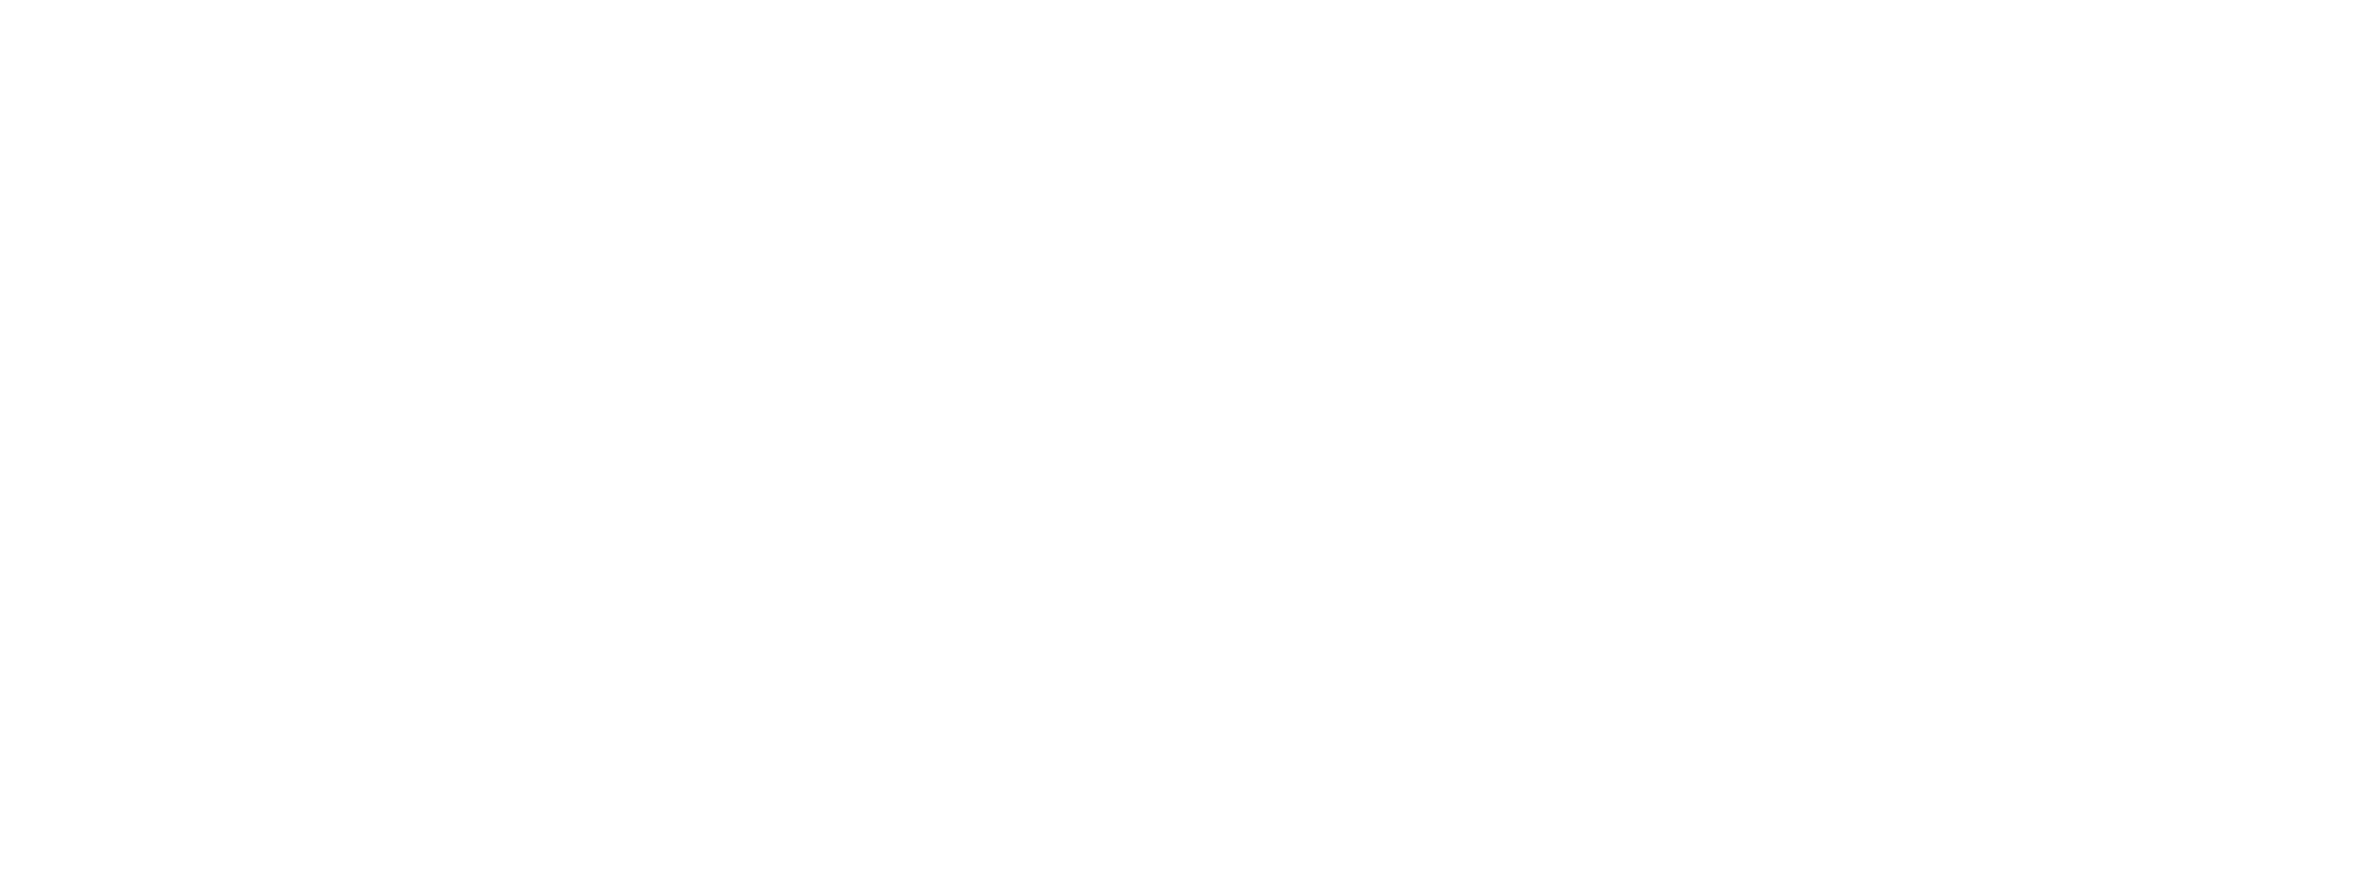 Video Arts